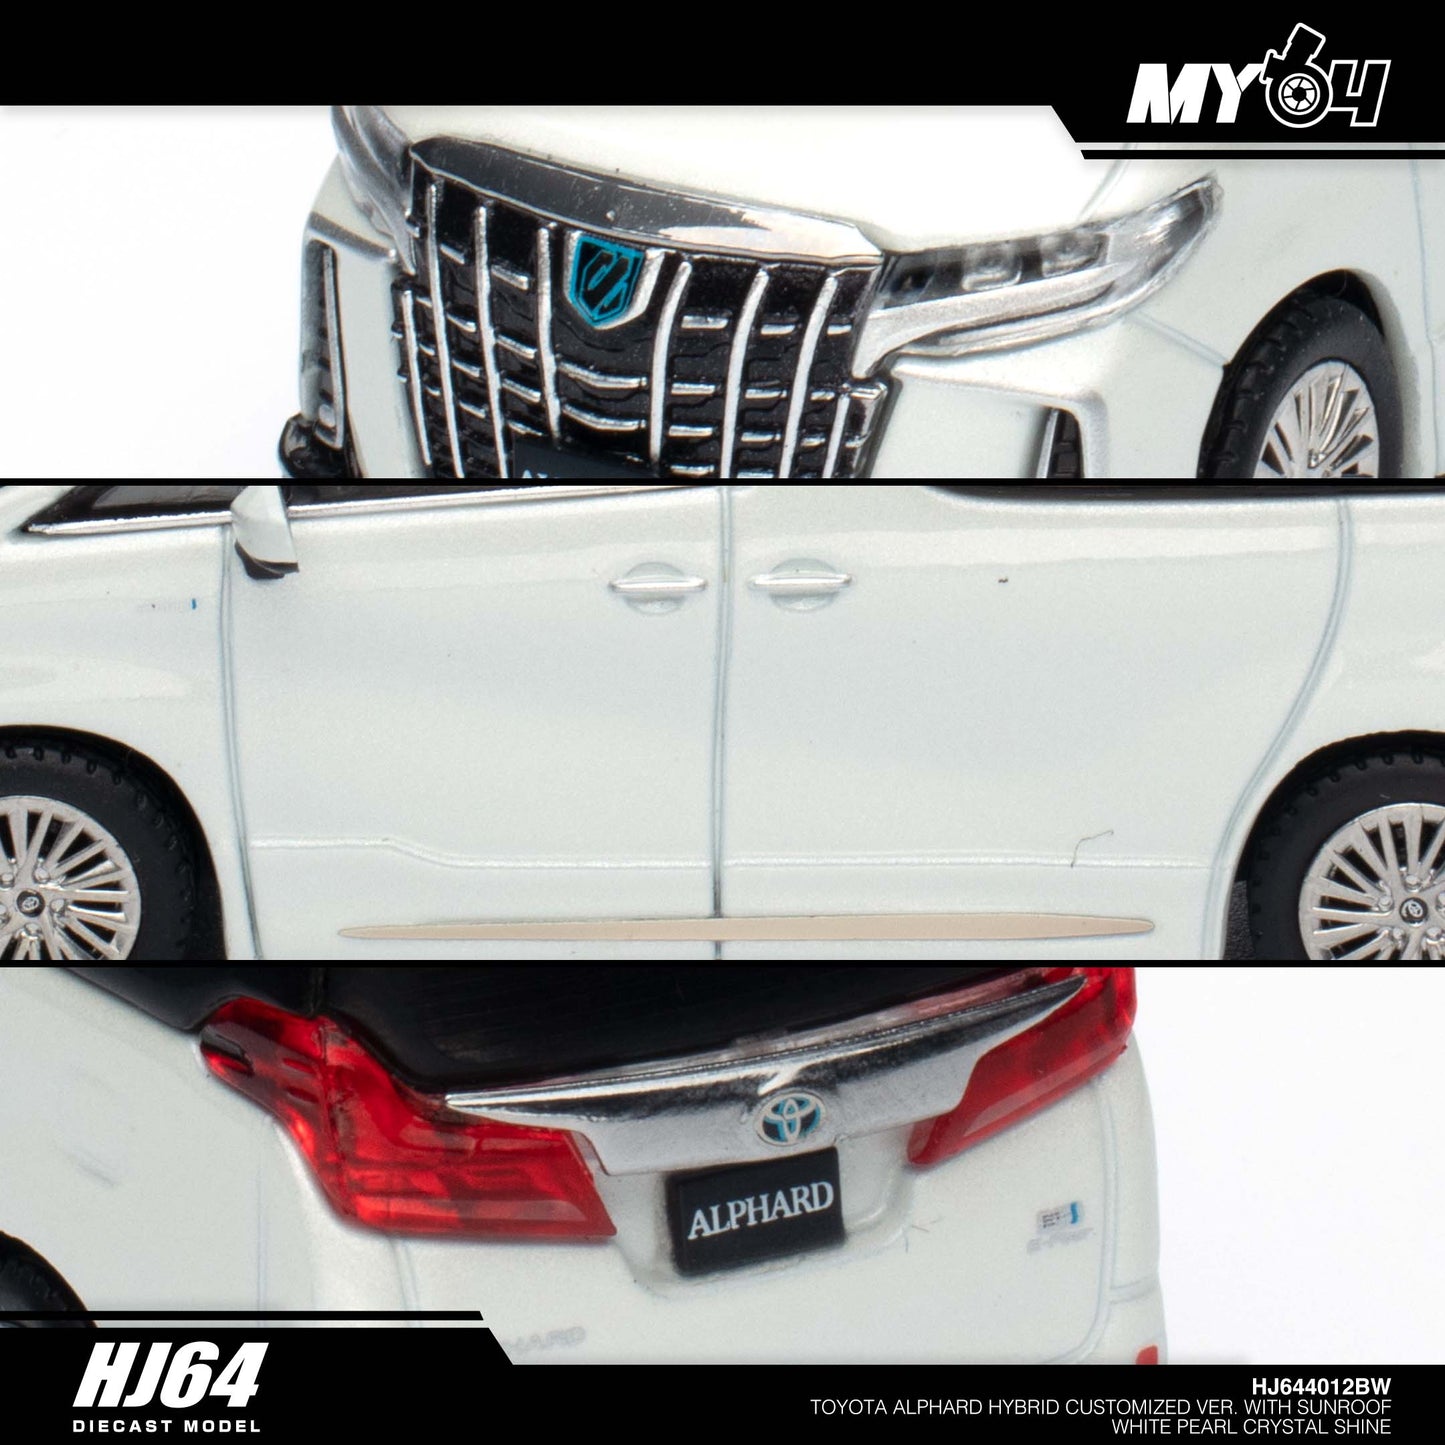 [Hobby Japan] Toyota Alphard Hybrid Customized Version With Sun Roof - White Pearl Crystal Shine